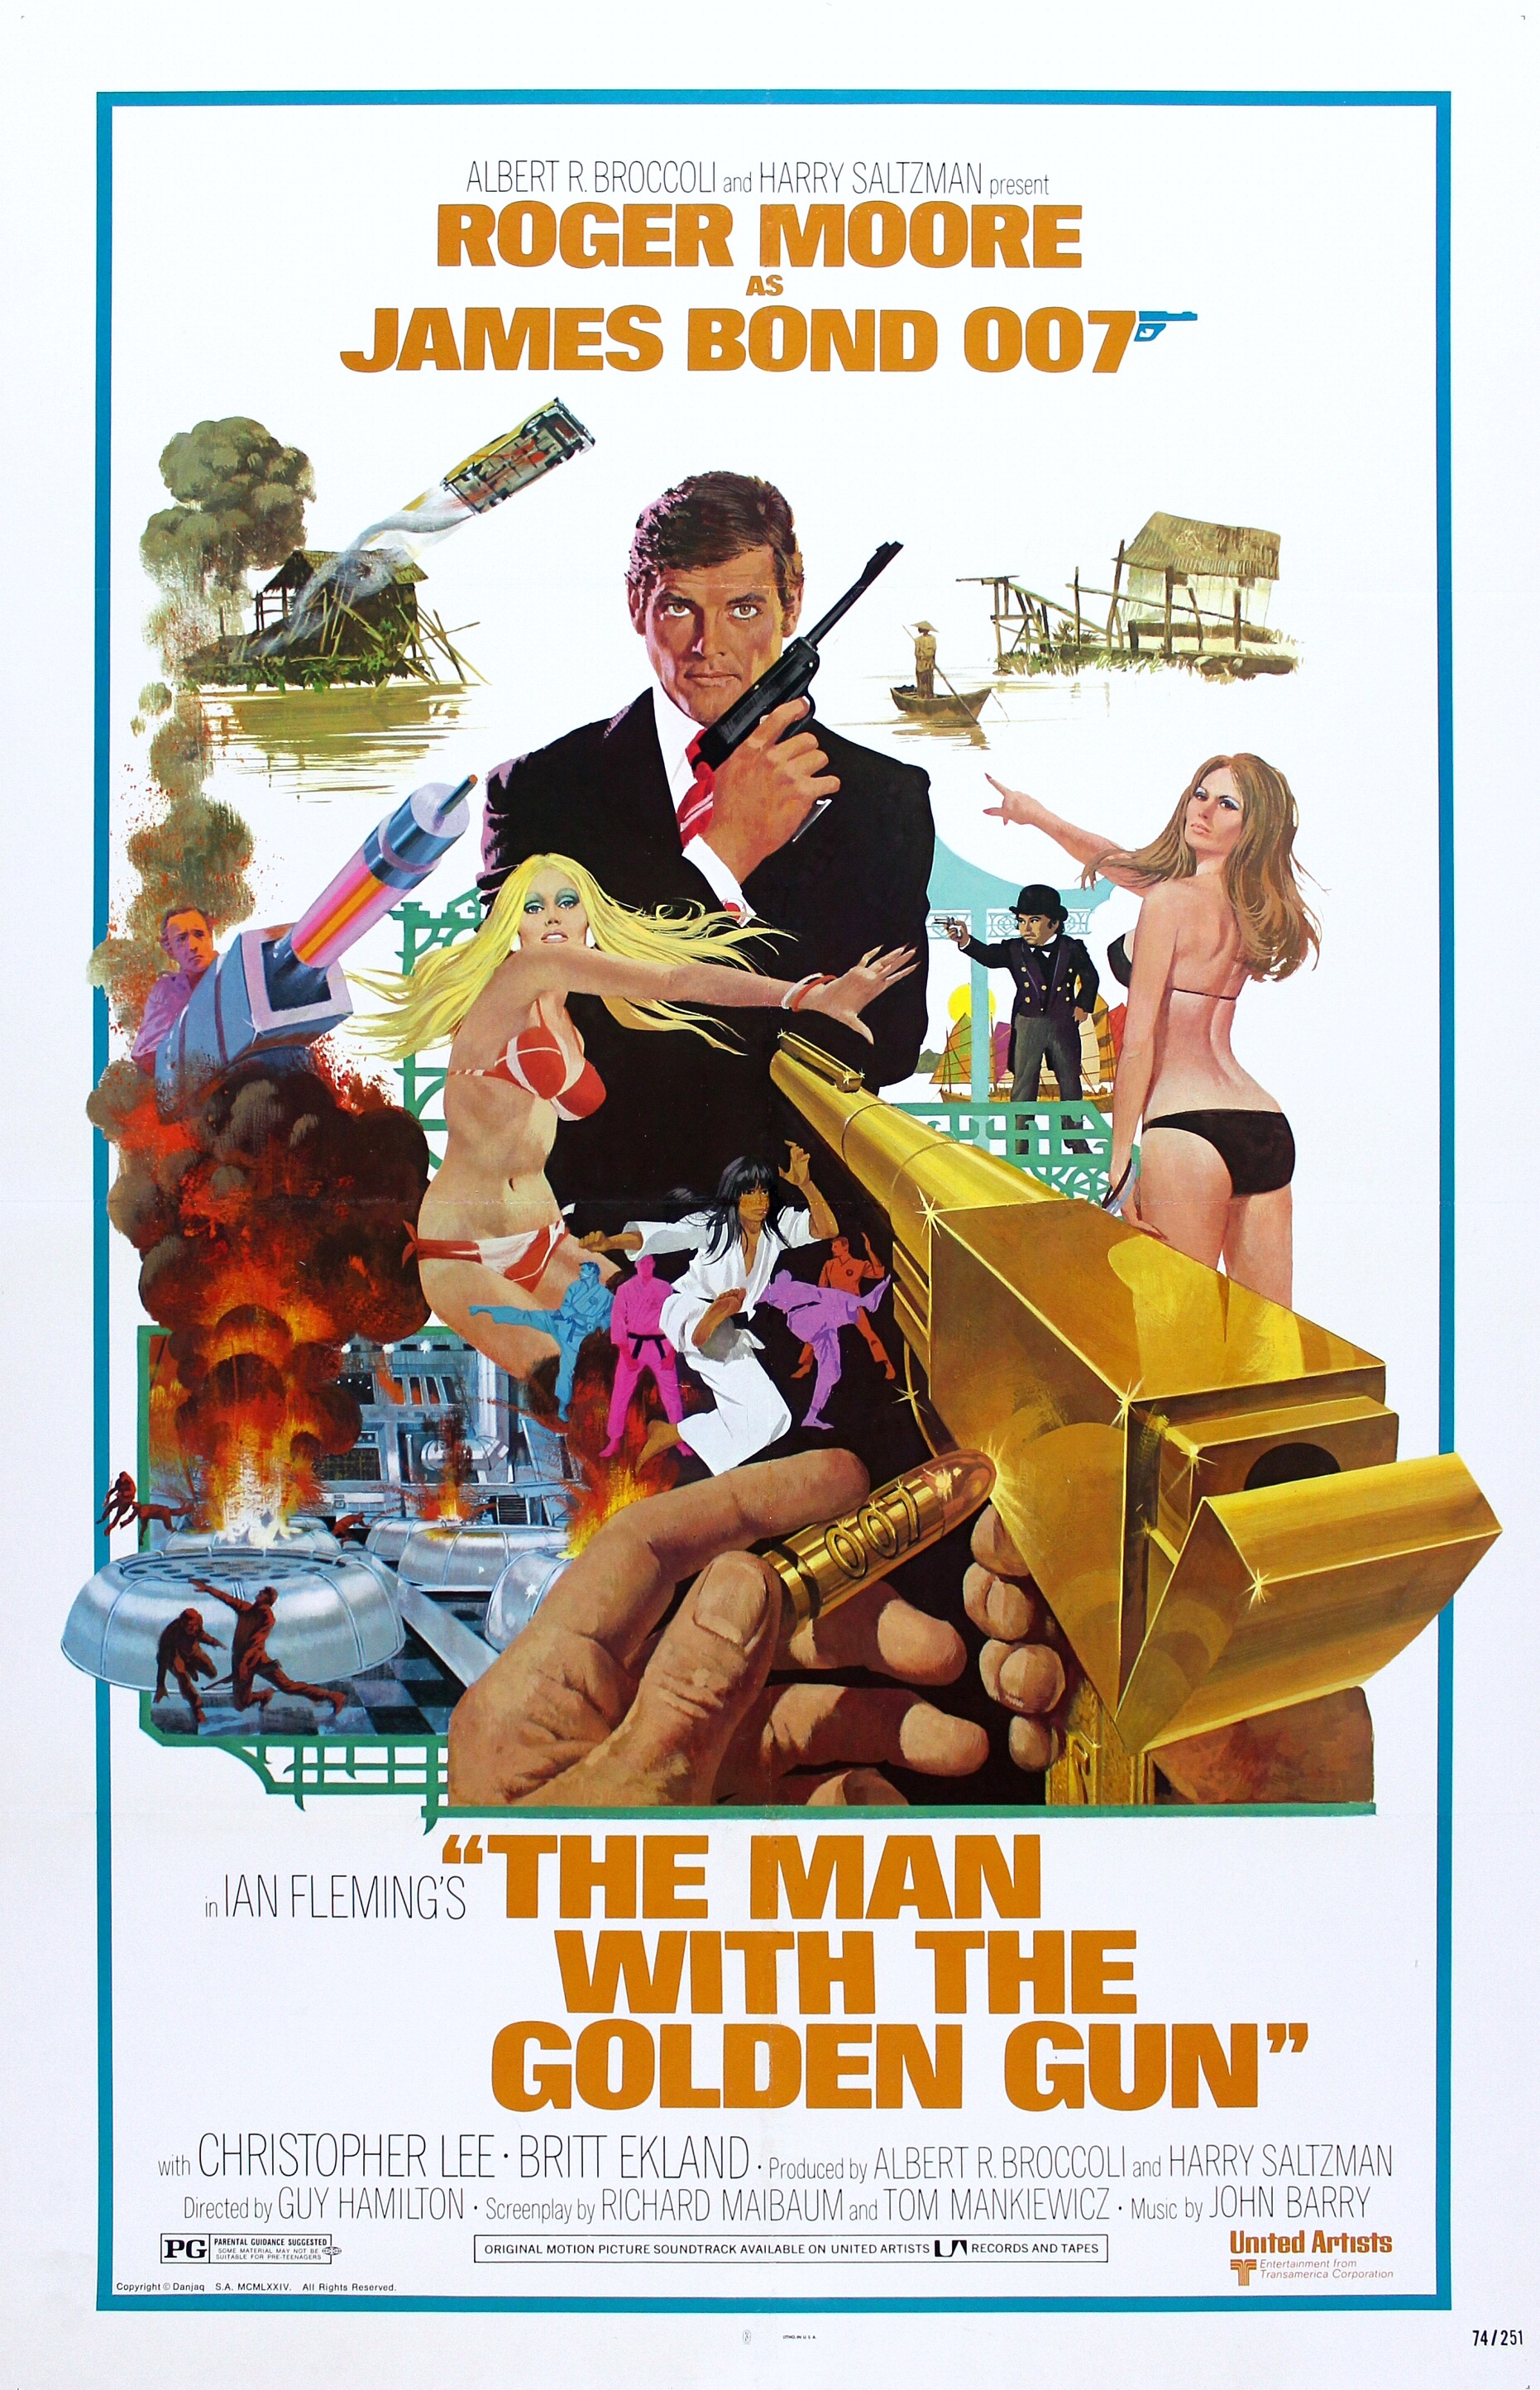 Nonton film The Man With The Golden Gun (james Bond 007) layarkaca21 indoxx1 ganool online streaming terbaru